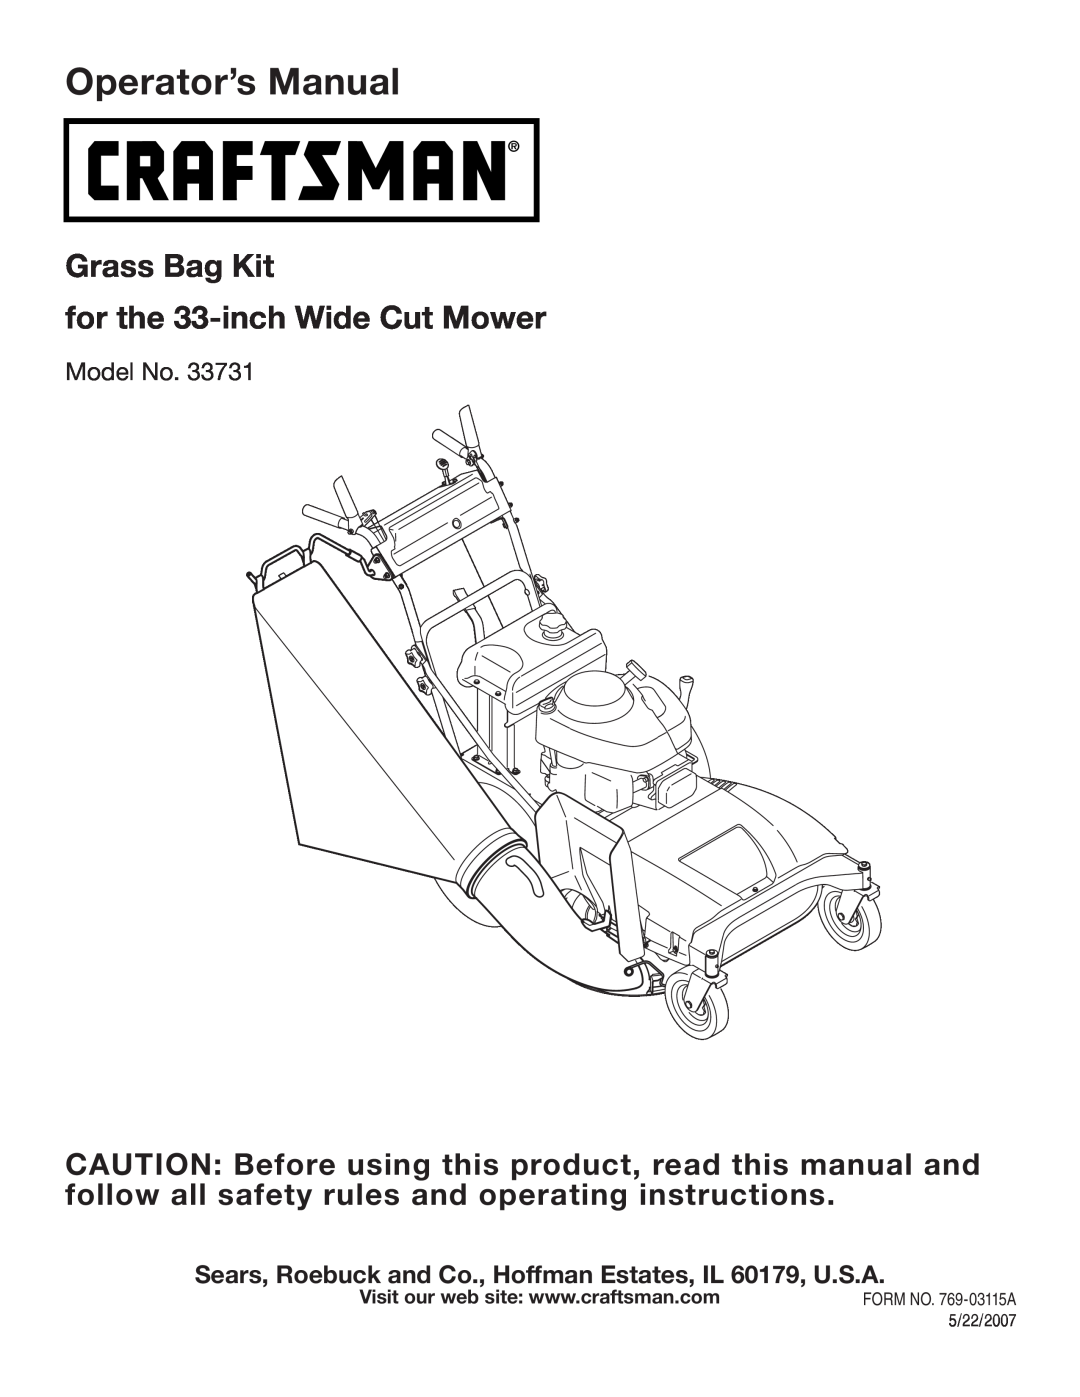 Craftsman 33731 manual Sears, Roebuck and Co., Hoffman Estates, IL 60179, U.S.A, Operator’s Manual, FORM NO. 769-03115A 